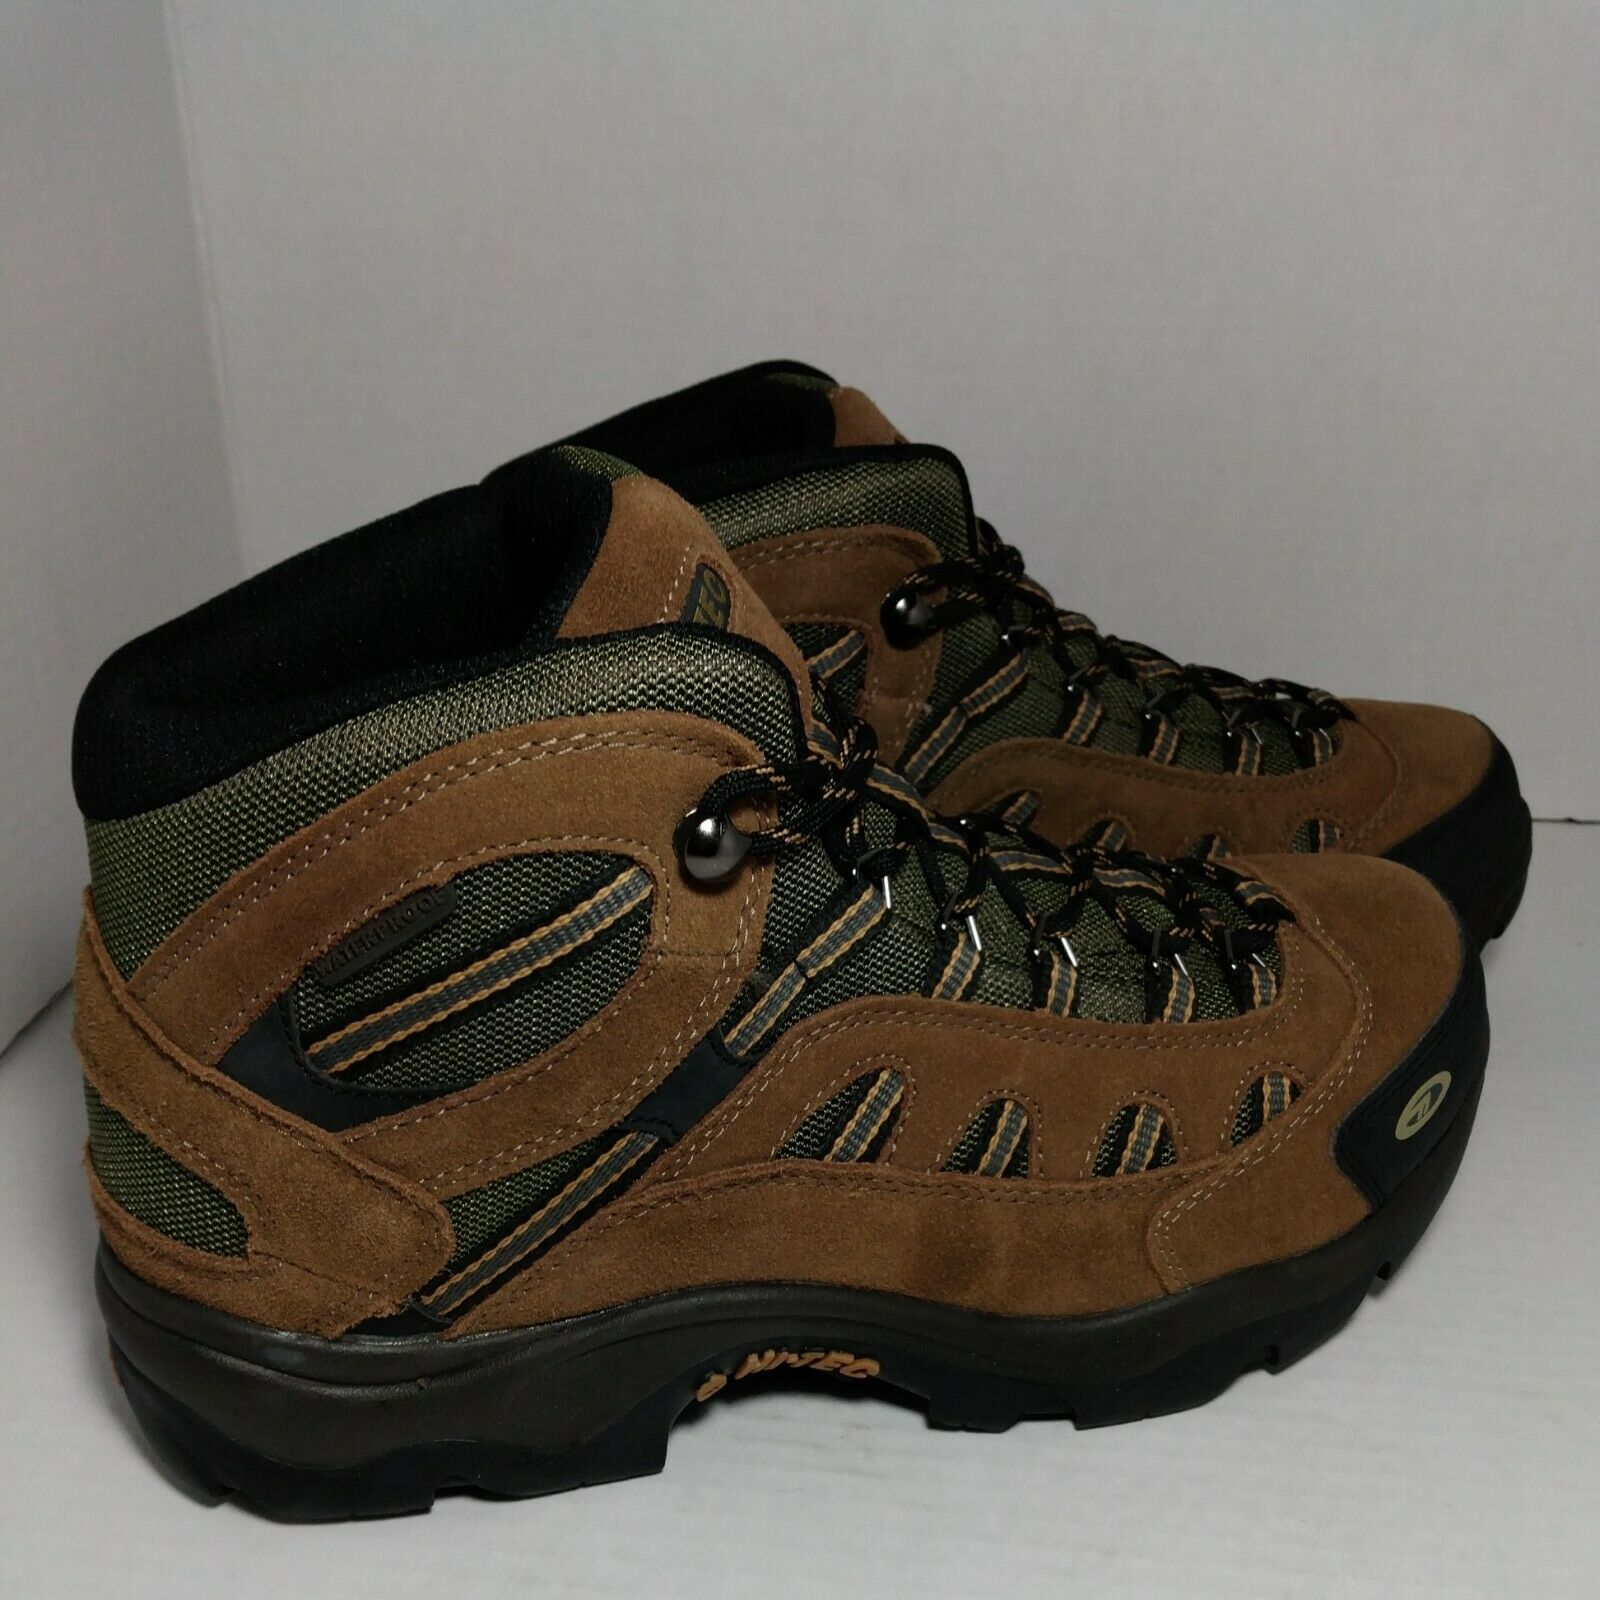 Hi-Tec Bandera Mid Wp 7035 Mens Brown/Green Suede Lace Up Hiking Boots 8.5